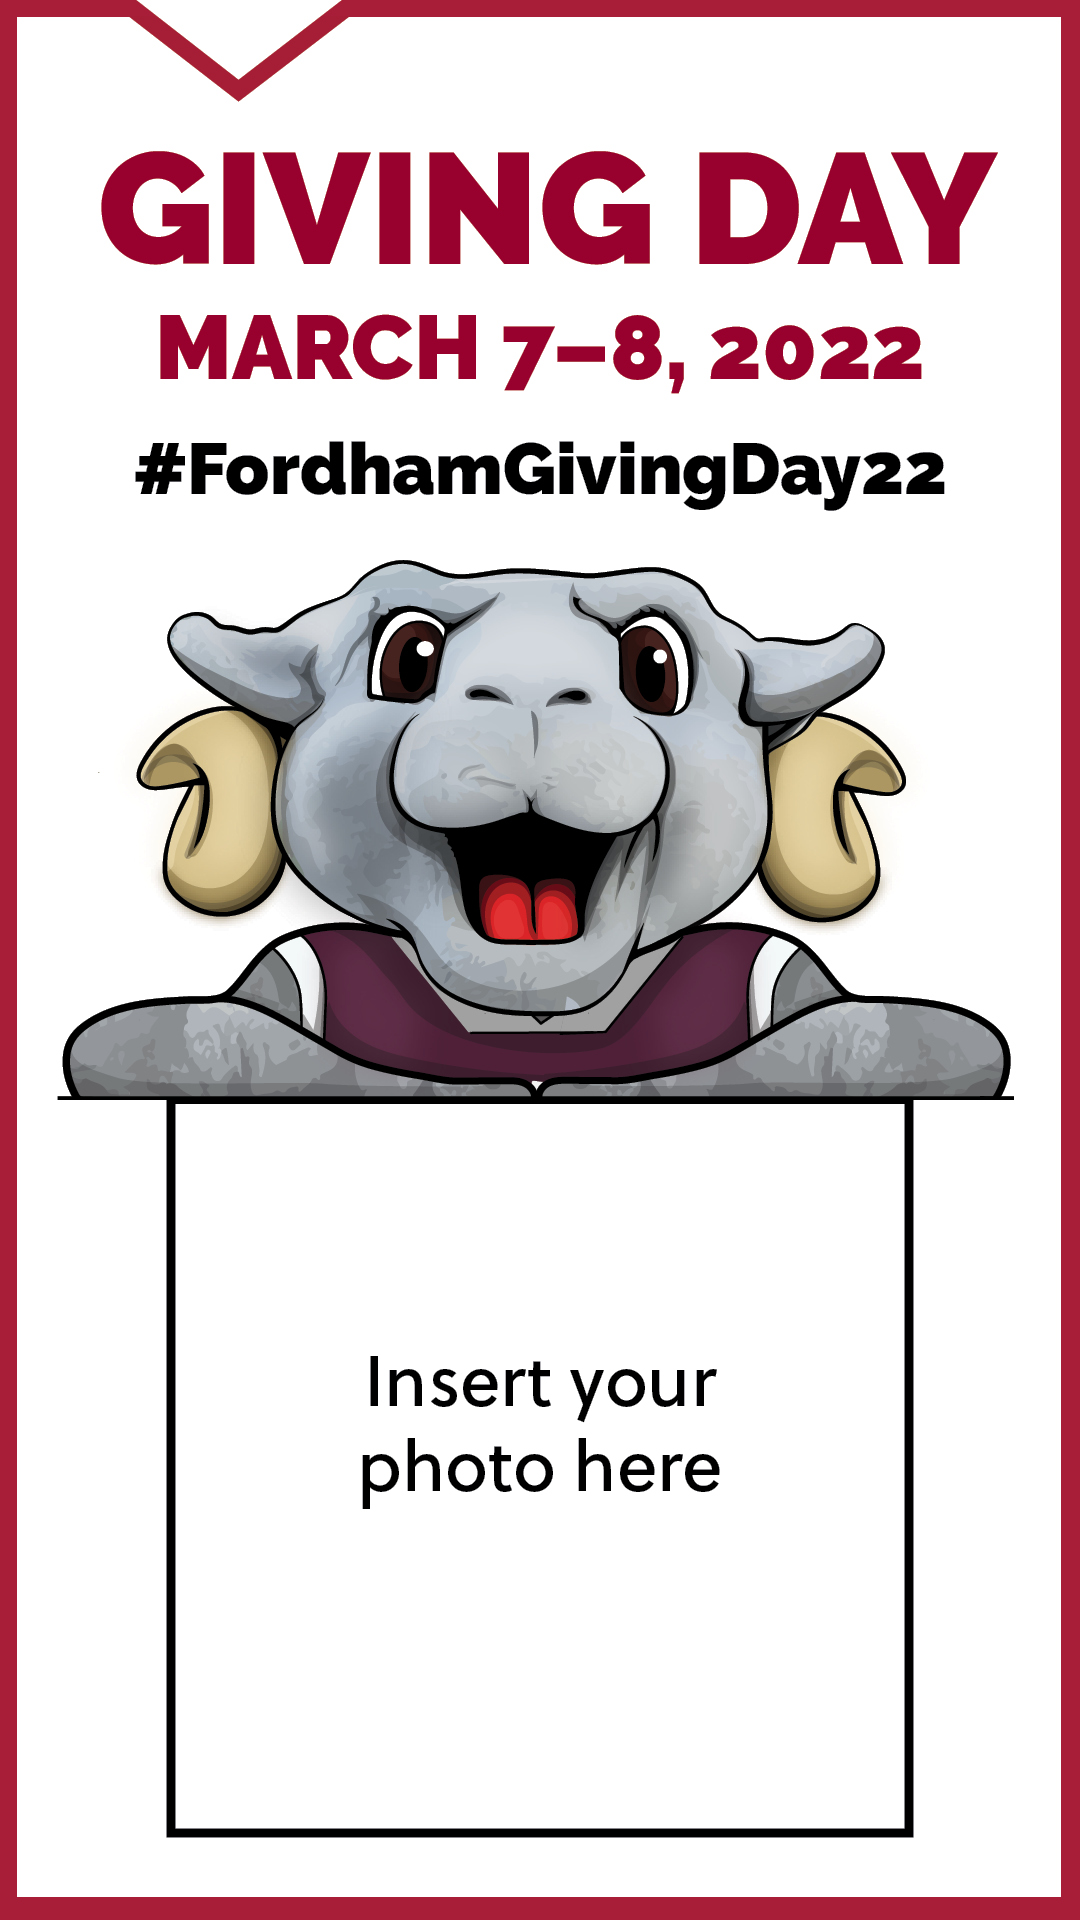 Vertical social share #FordhamGivingDay22